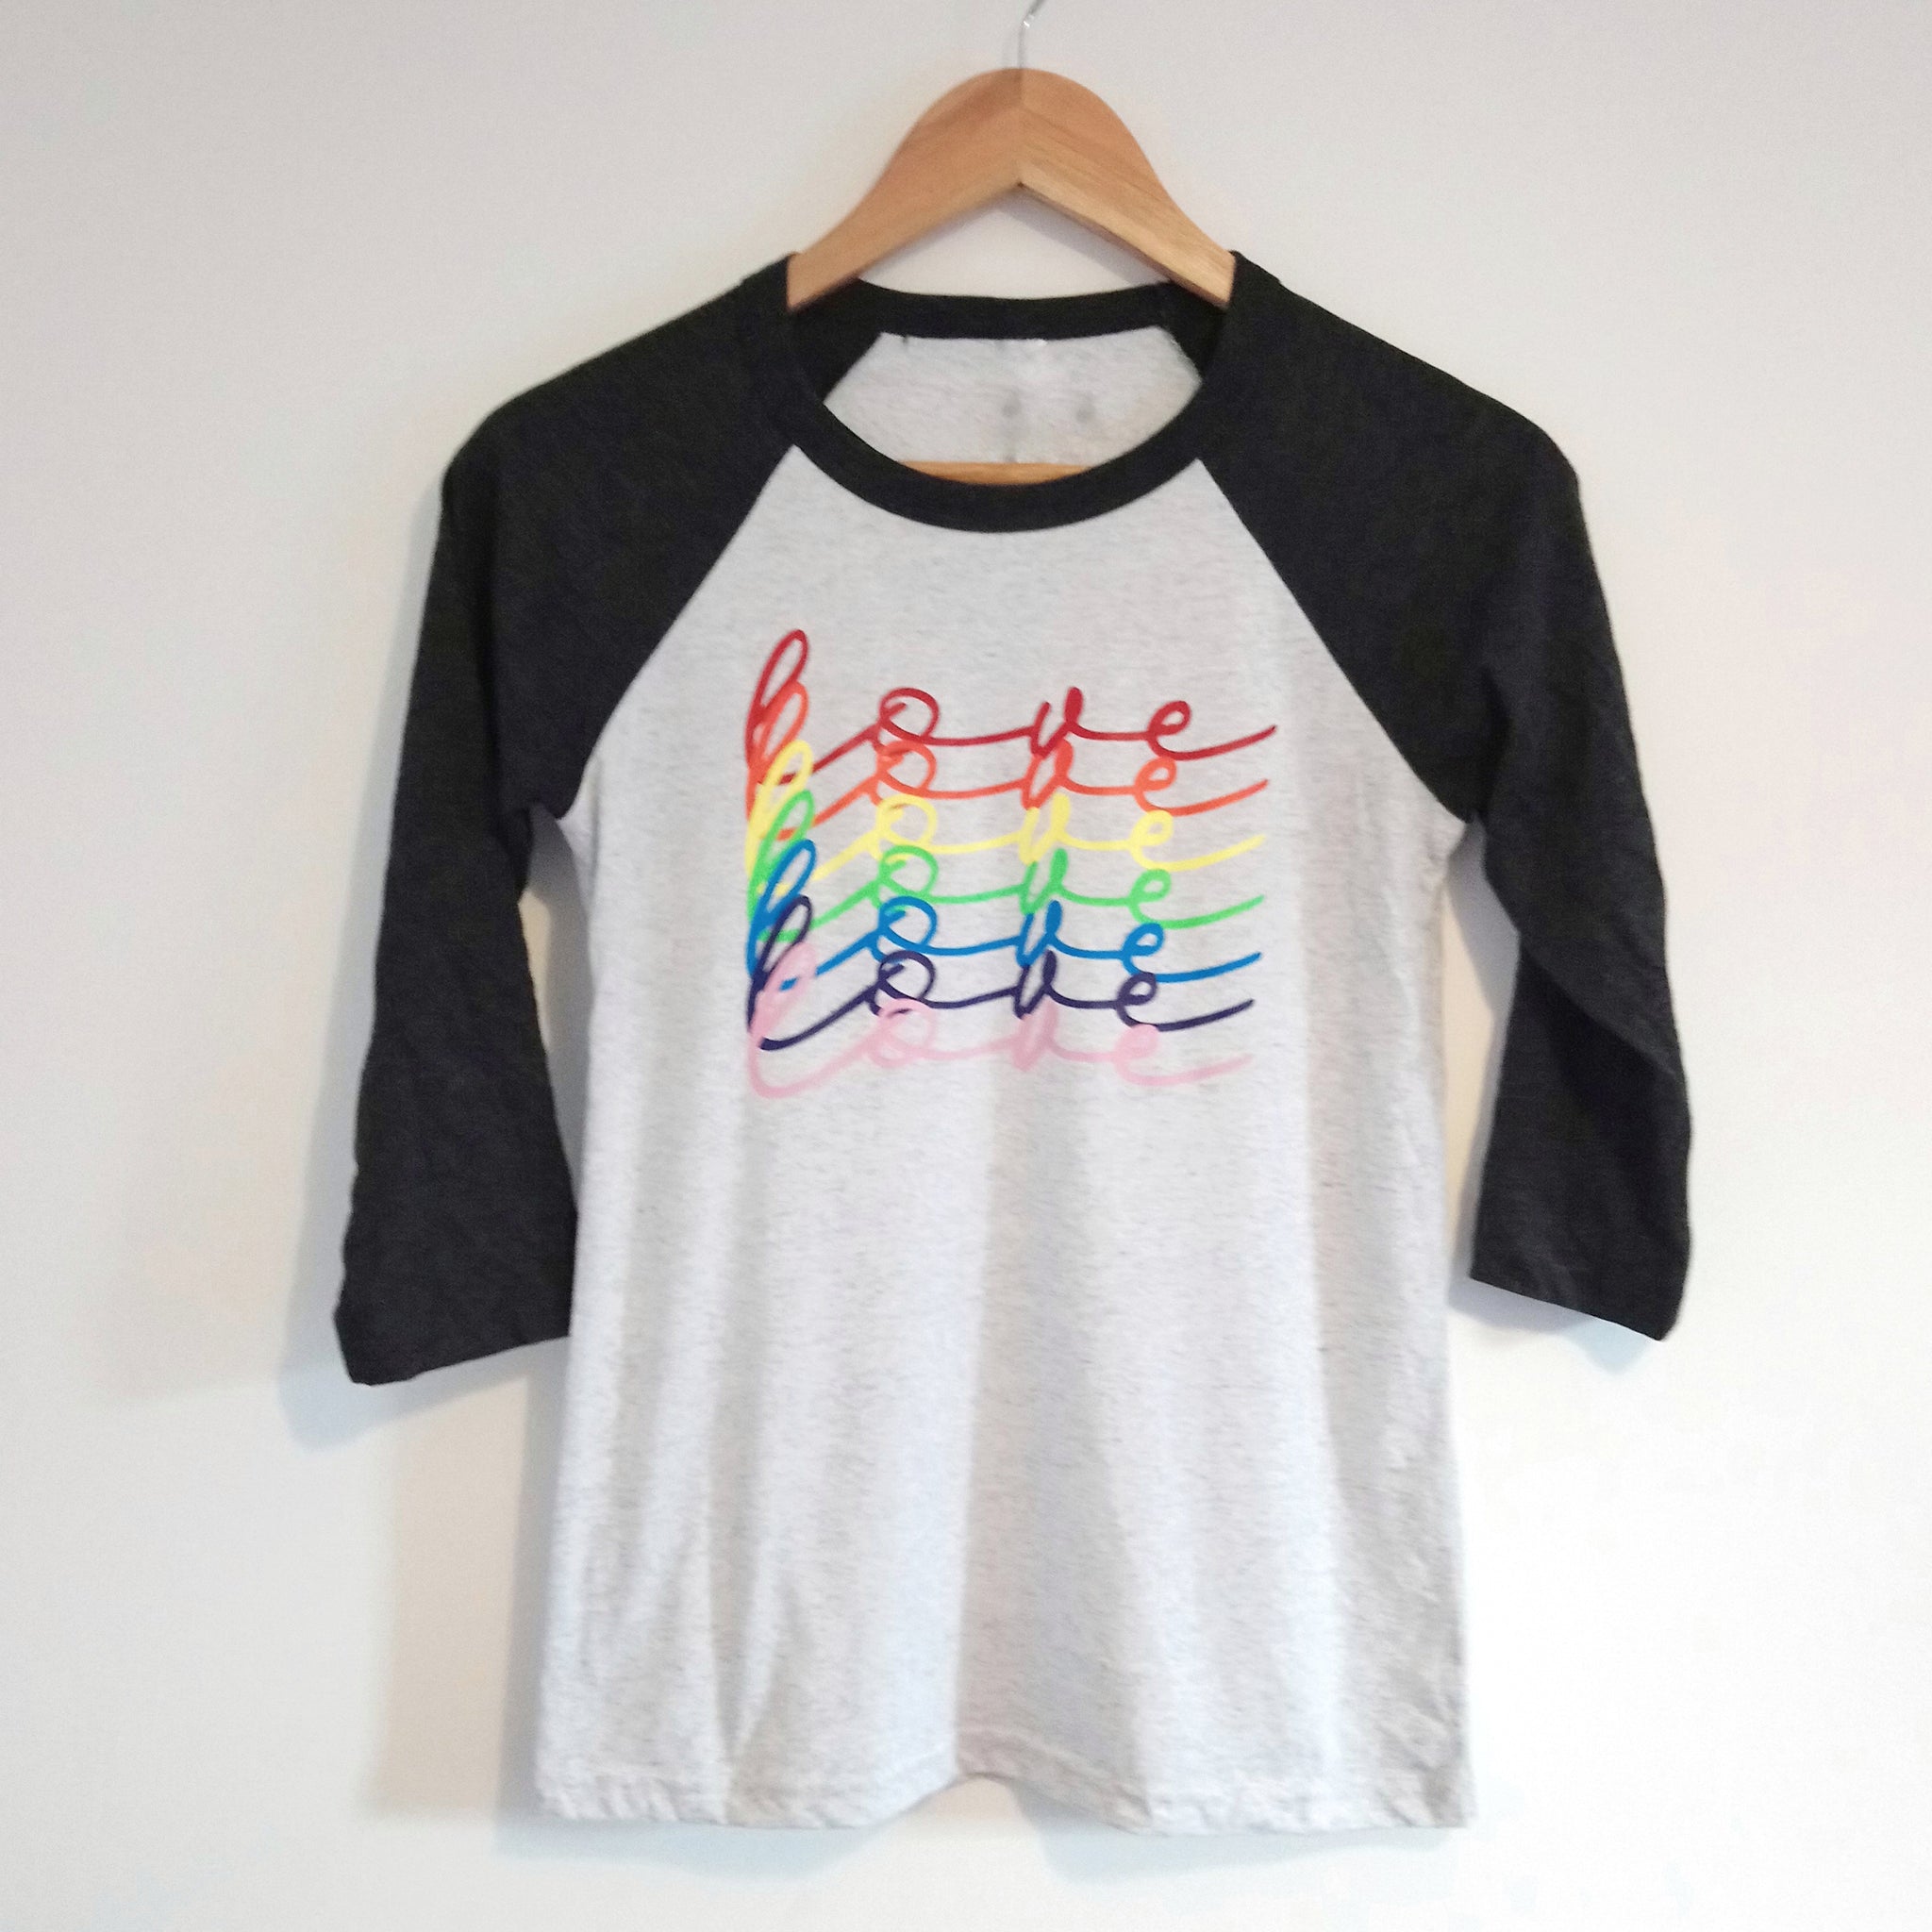 Rainbow "love" 3/4 sleeve baseball top